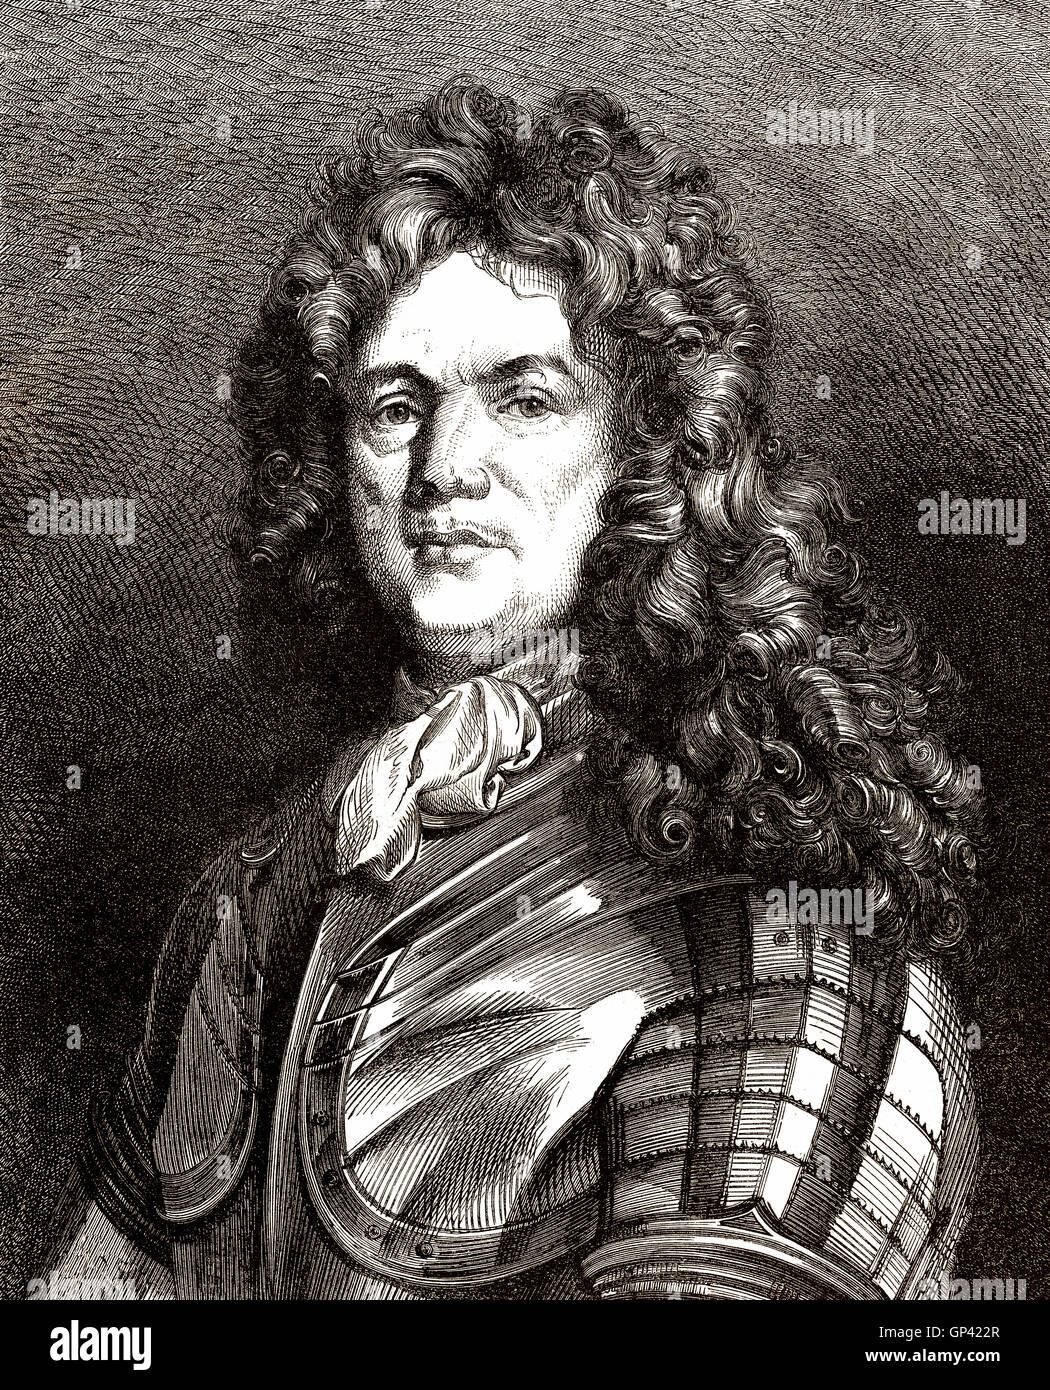 Sébastien Le Prestre de Vauban, Marquis de Vauban, 1633 - 1707, Marshal of France and military engineer Stock Photo